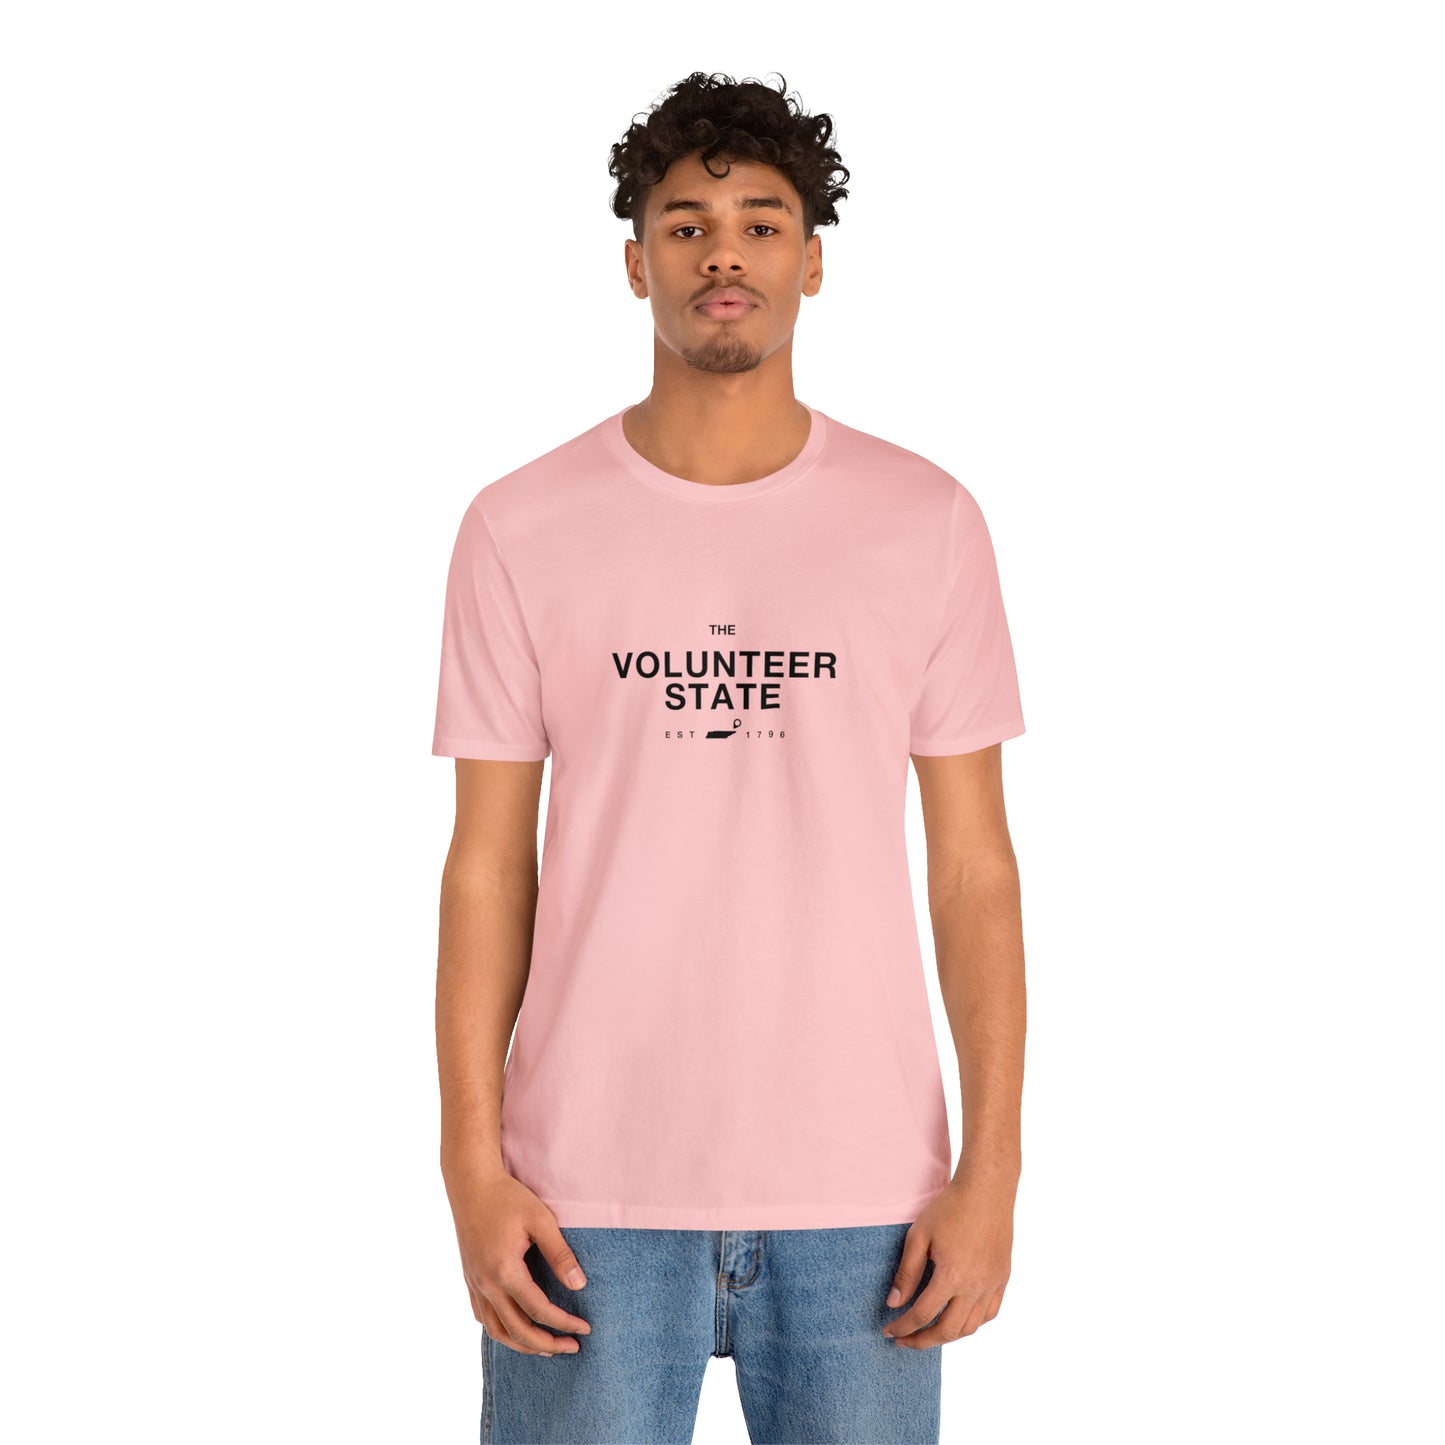 Tennessee Nickname Shirt